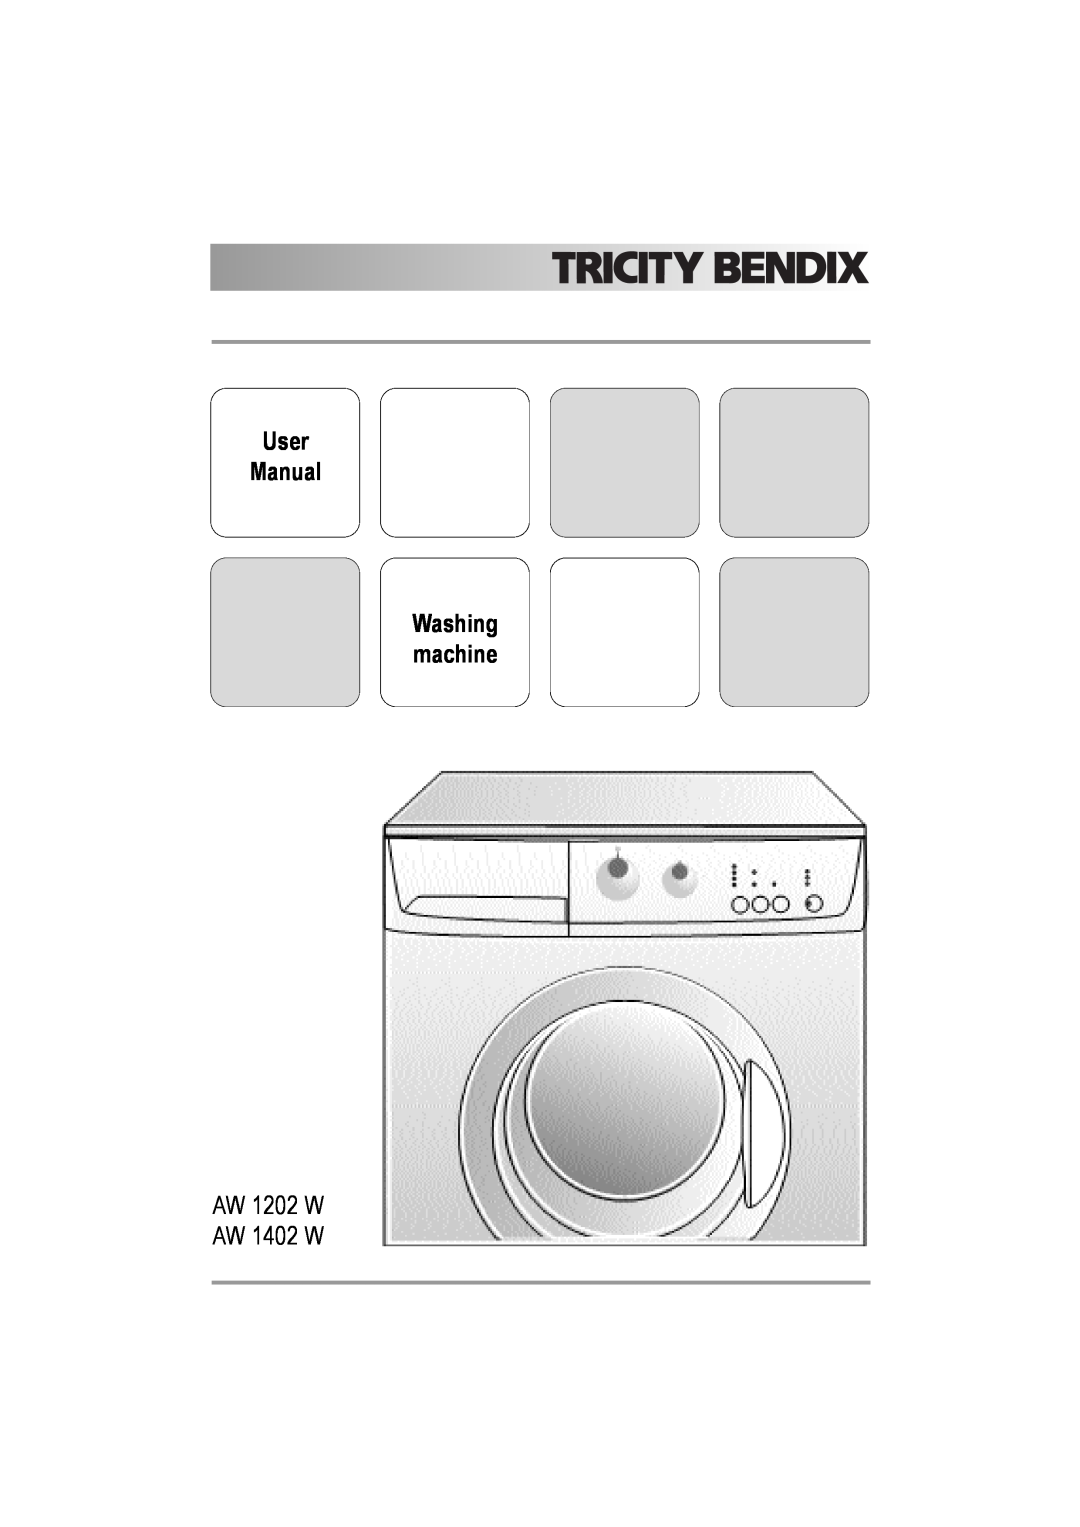 Electrolux user manual User Manual Washing machine, AW 1202 W AW 1402 W 